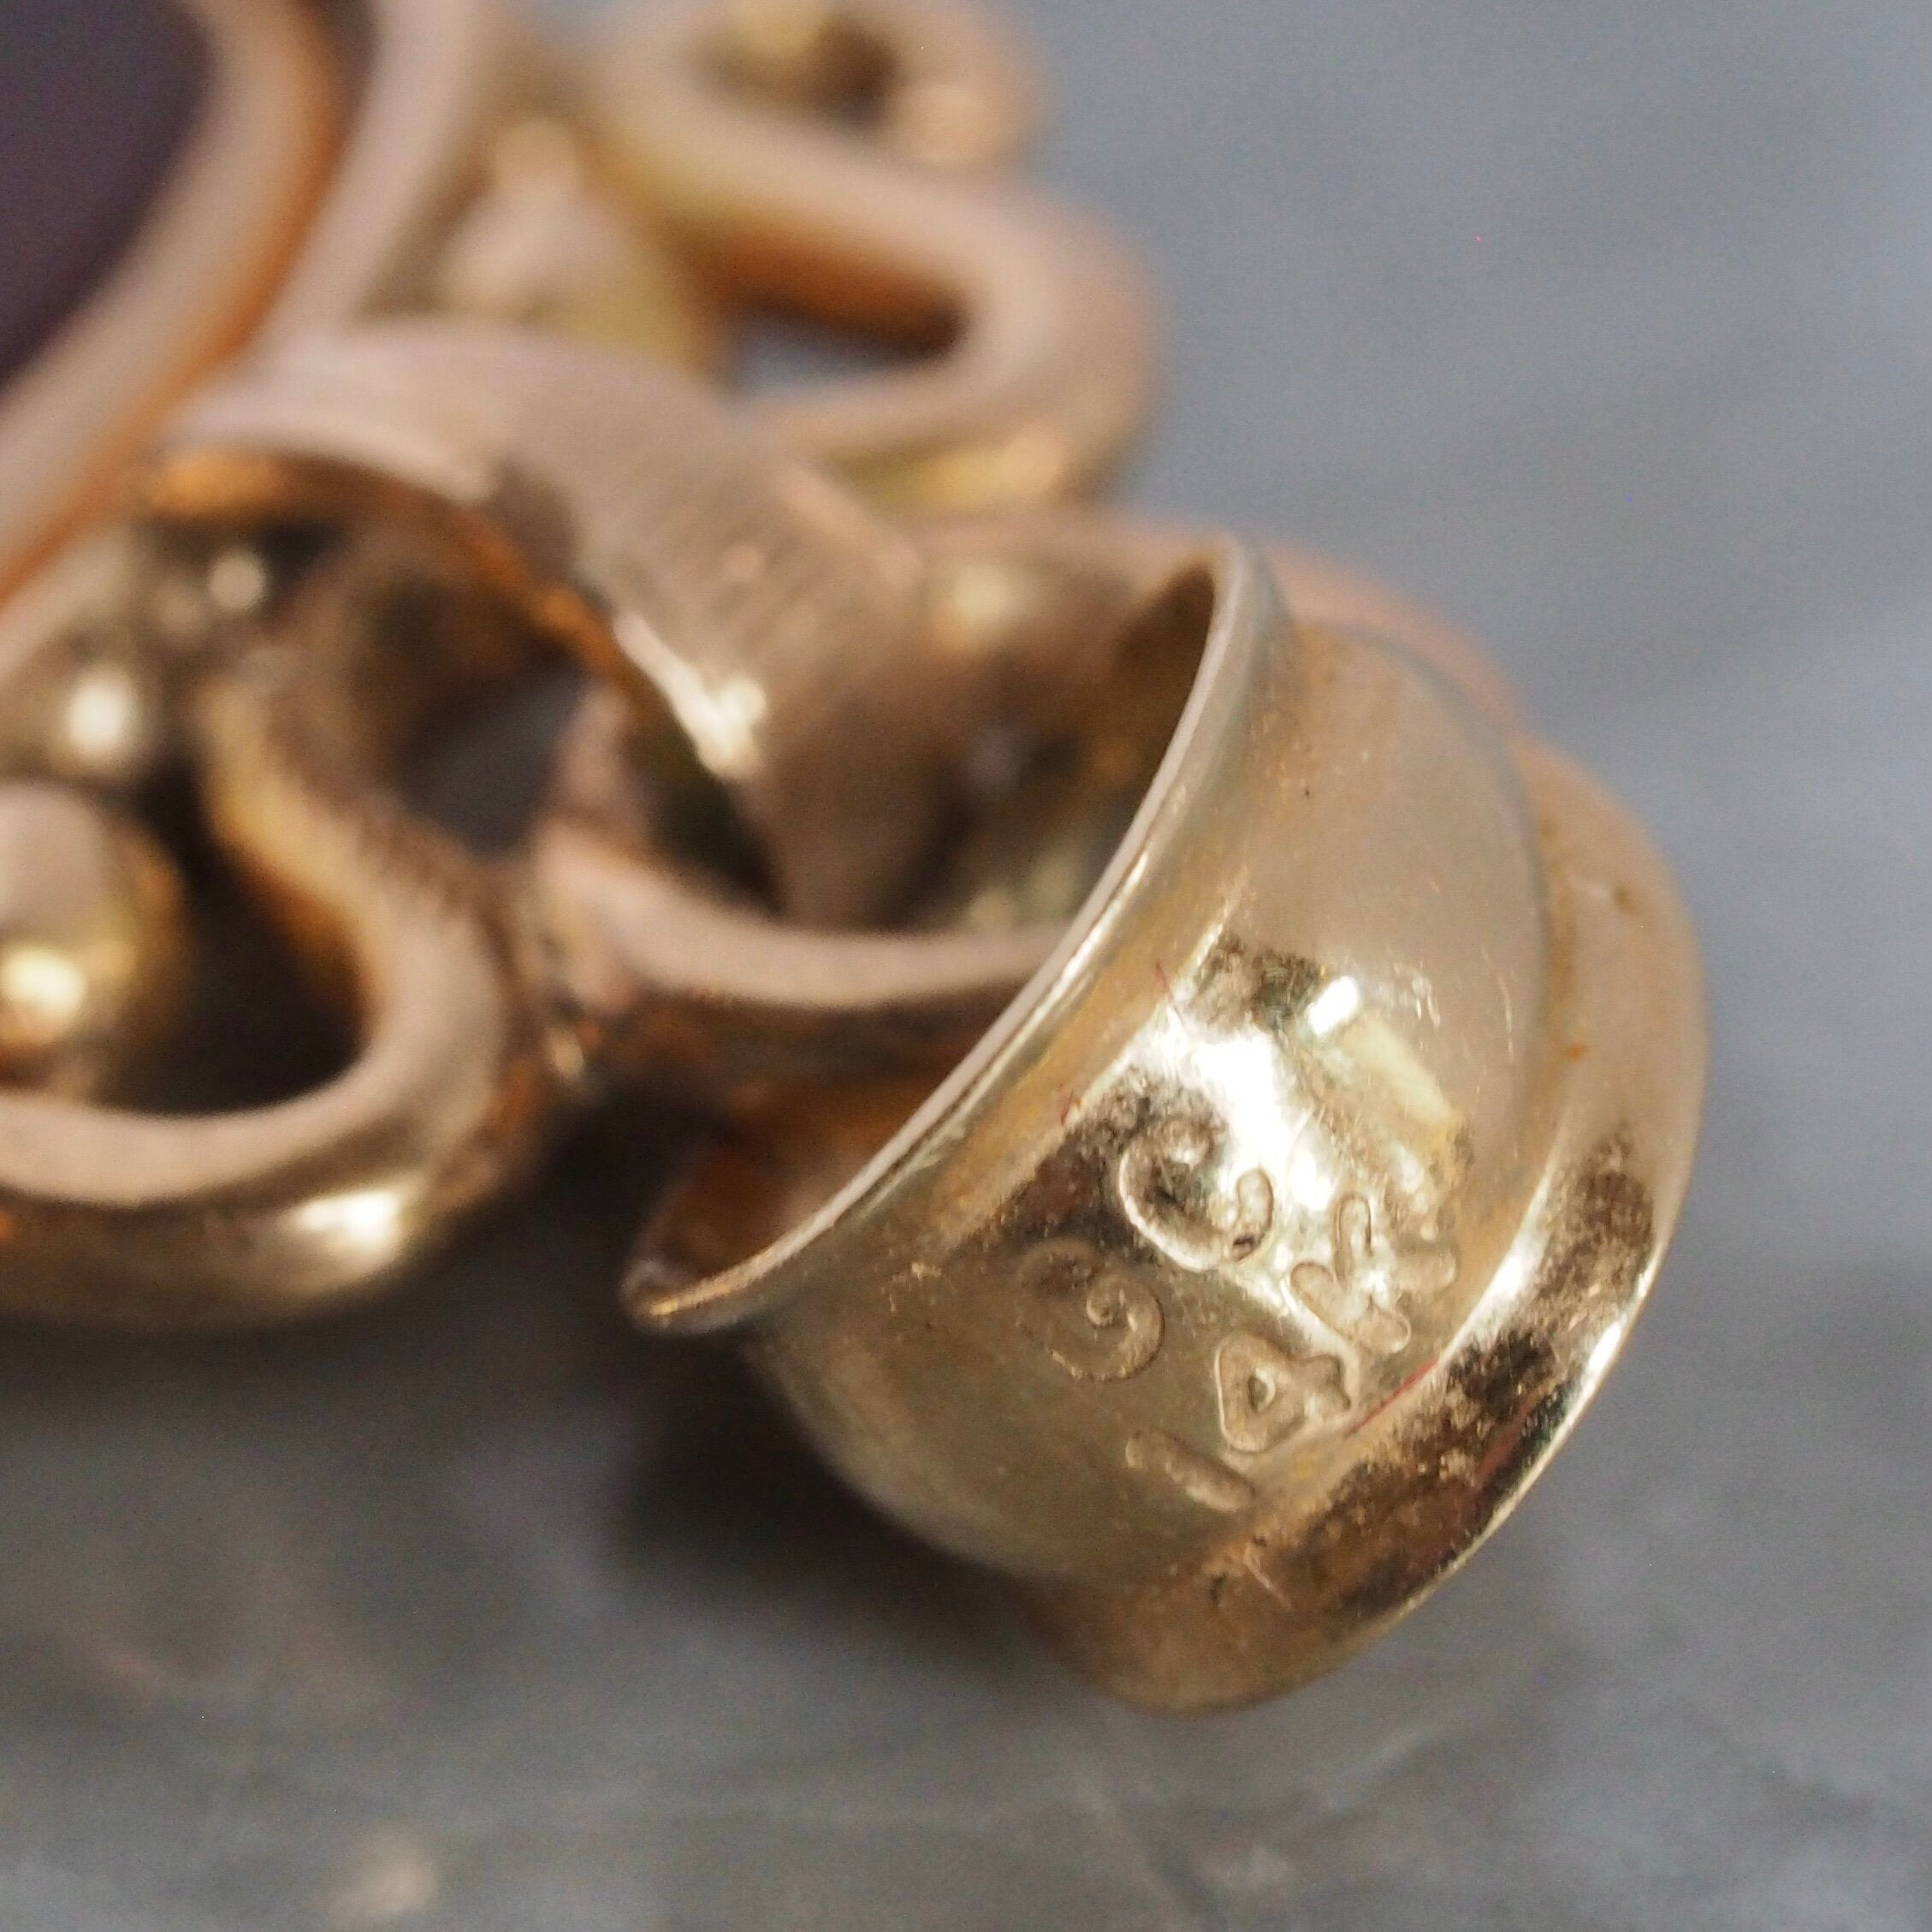 Antique Victorian 14k Gold Carnelian Intaglio Swivel Pendant